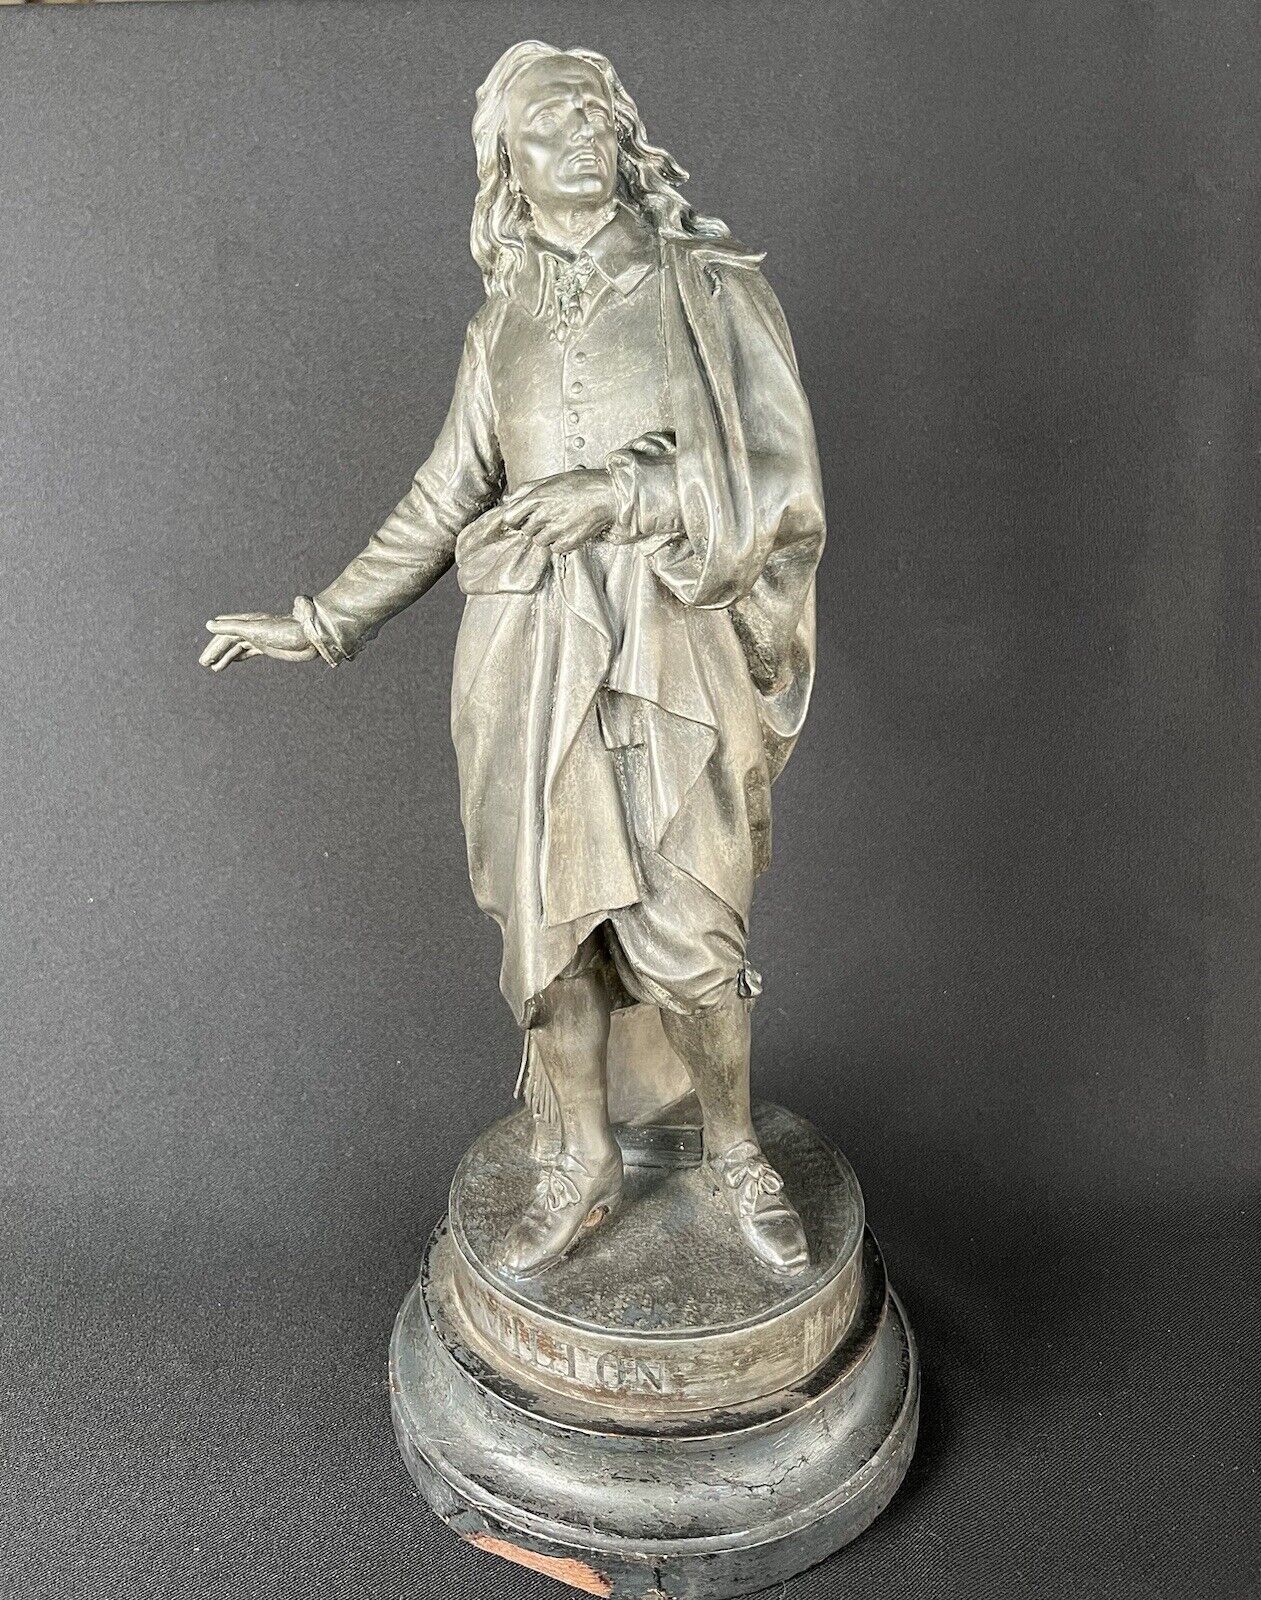 Antique Metal Statue of Poet John Milton 18